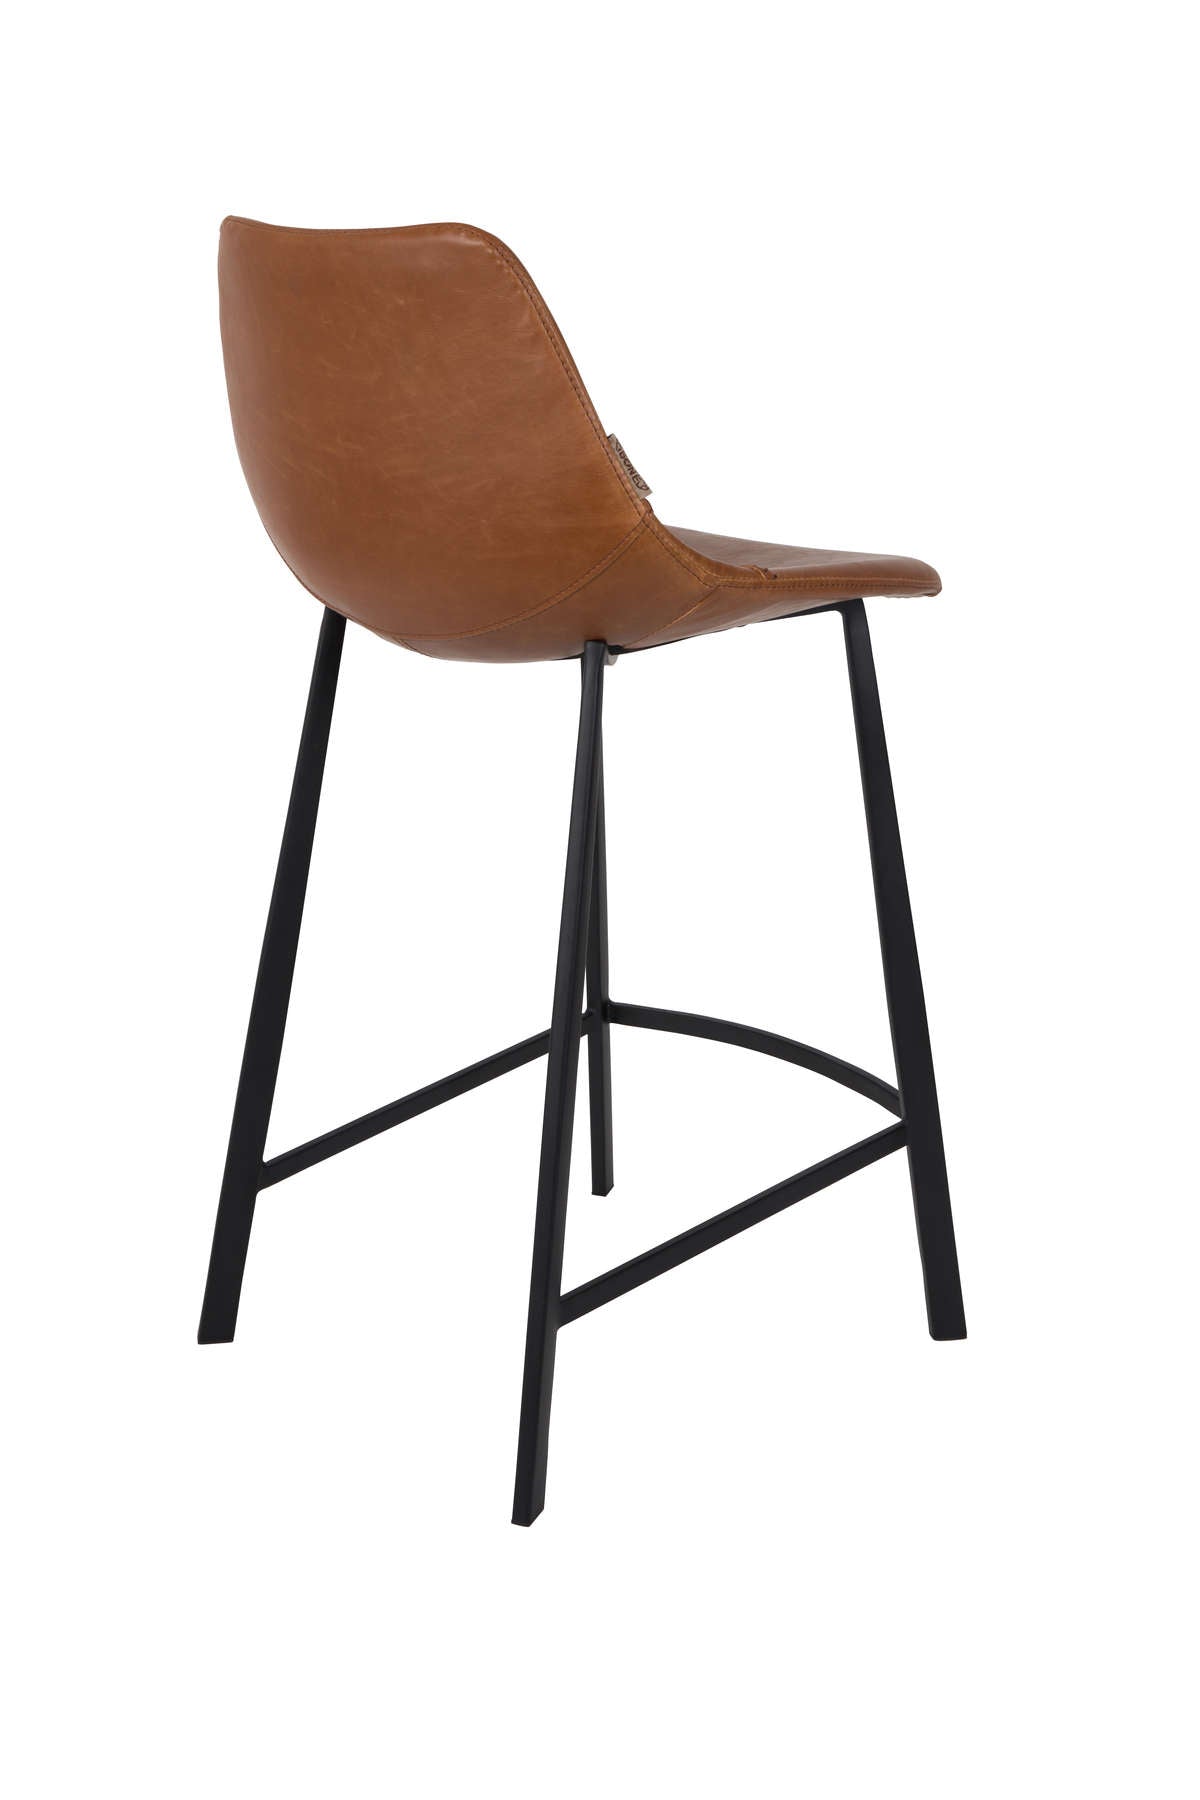 Bar stool FRANKY 65 brown, Dutchbone, Eye on Design